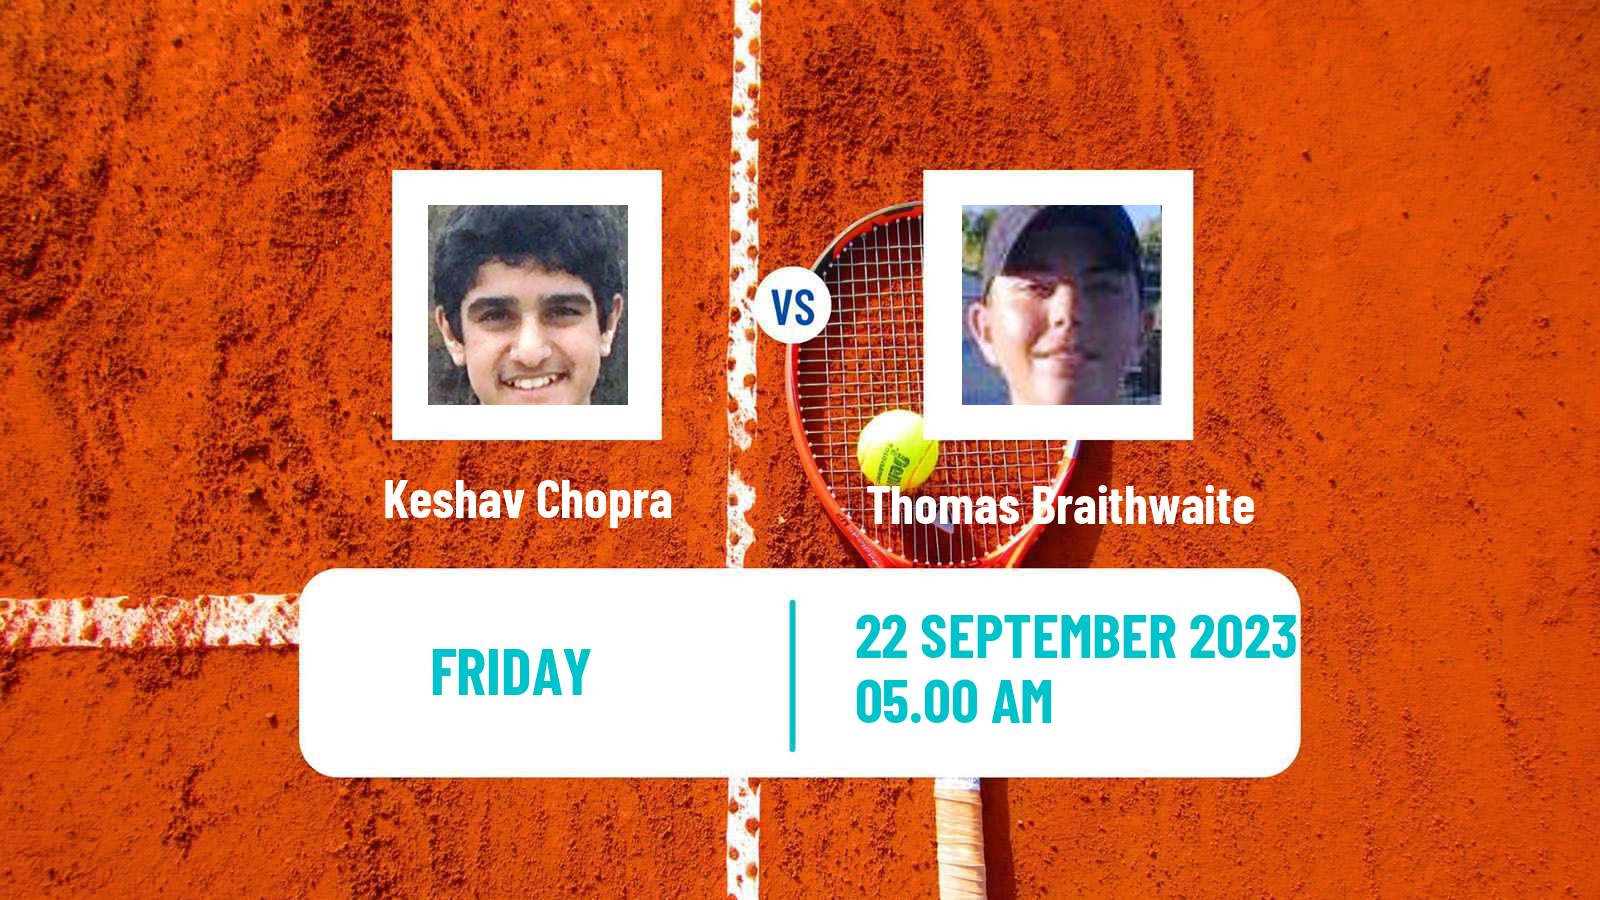 Tennis ITF M15 Monastir 38 Men Keshav Chopra - Thomas Braithwaite